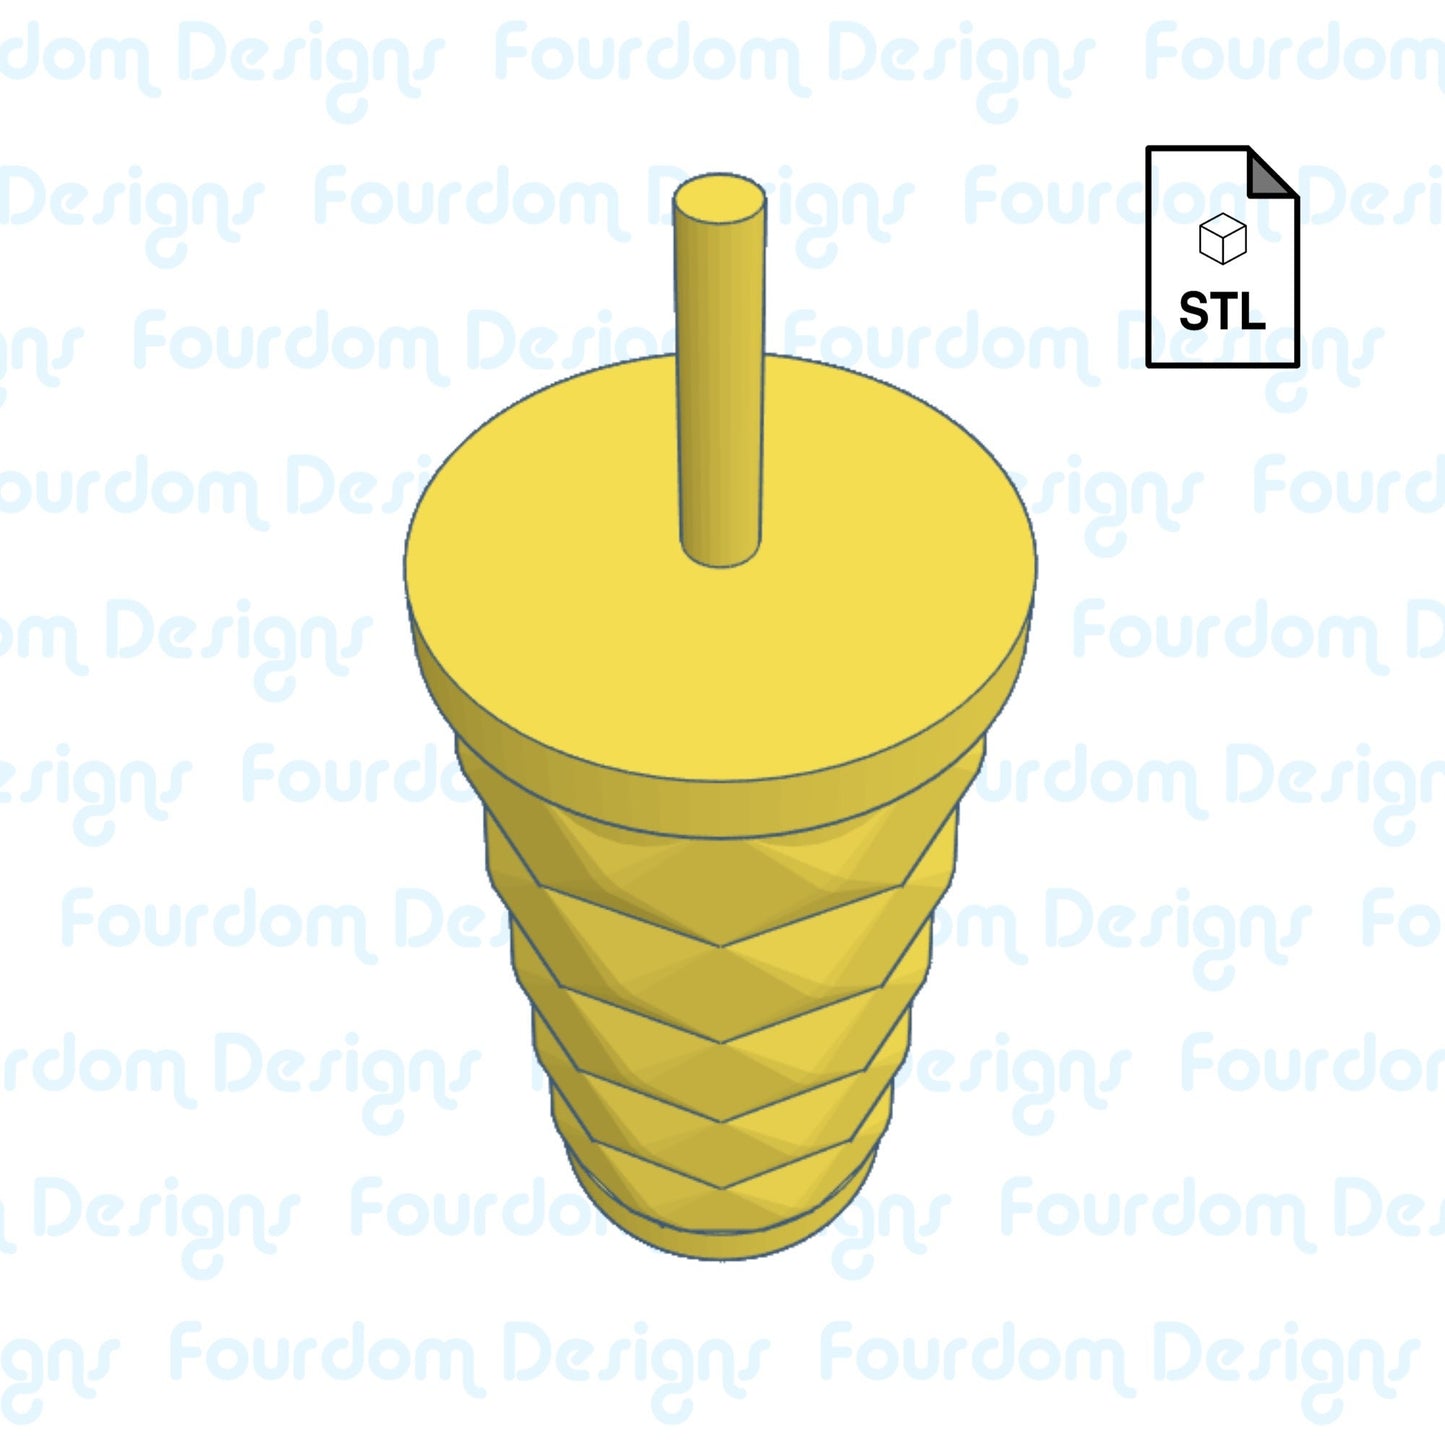 Pineapple Tumbler Keychain STL File for 3D Printing - Digital Download